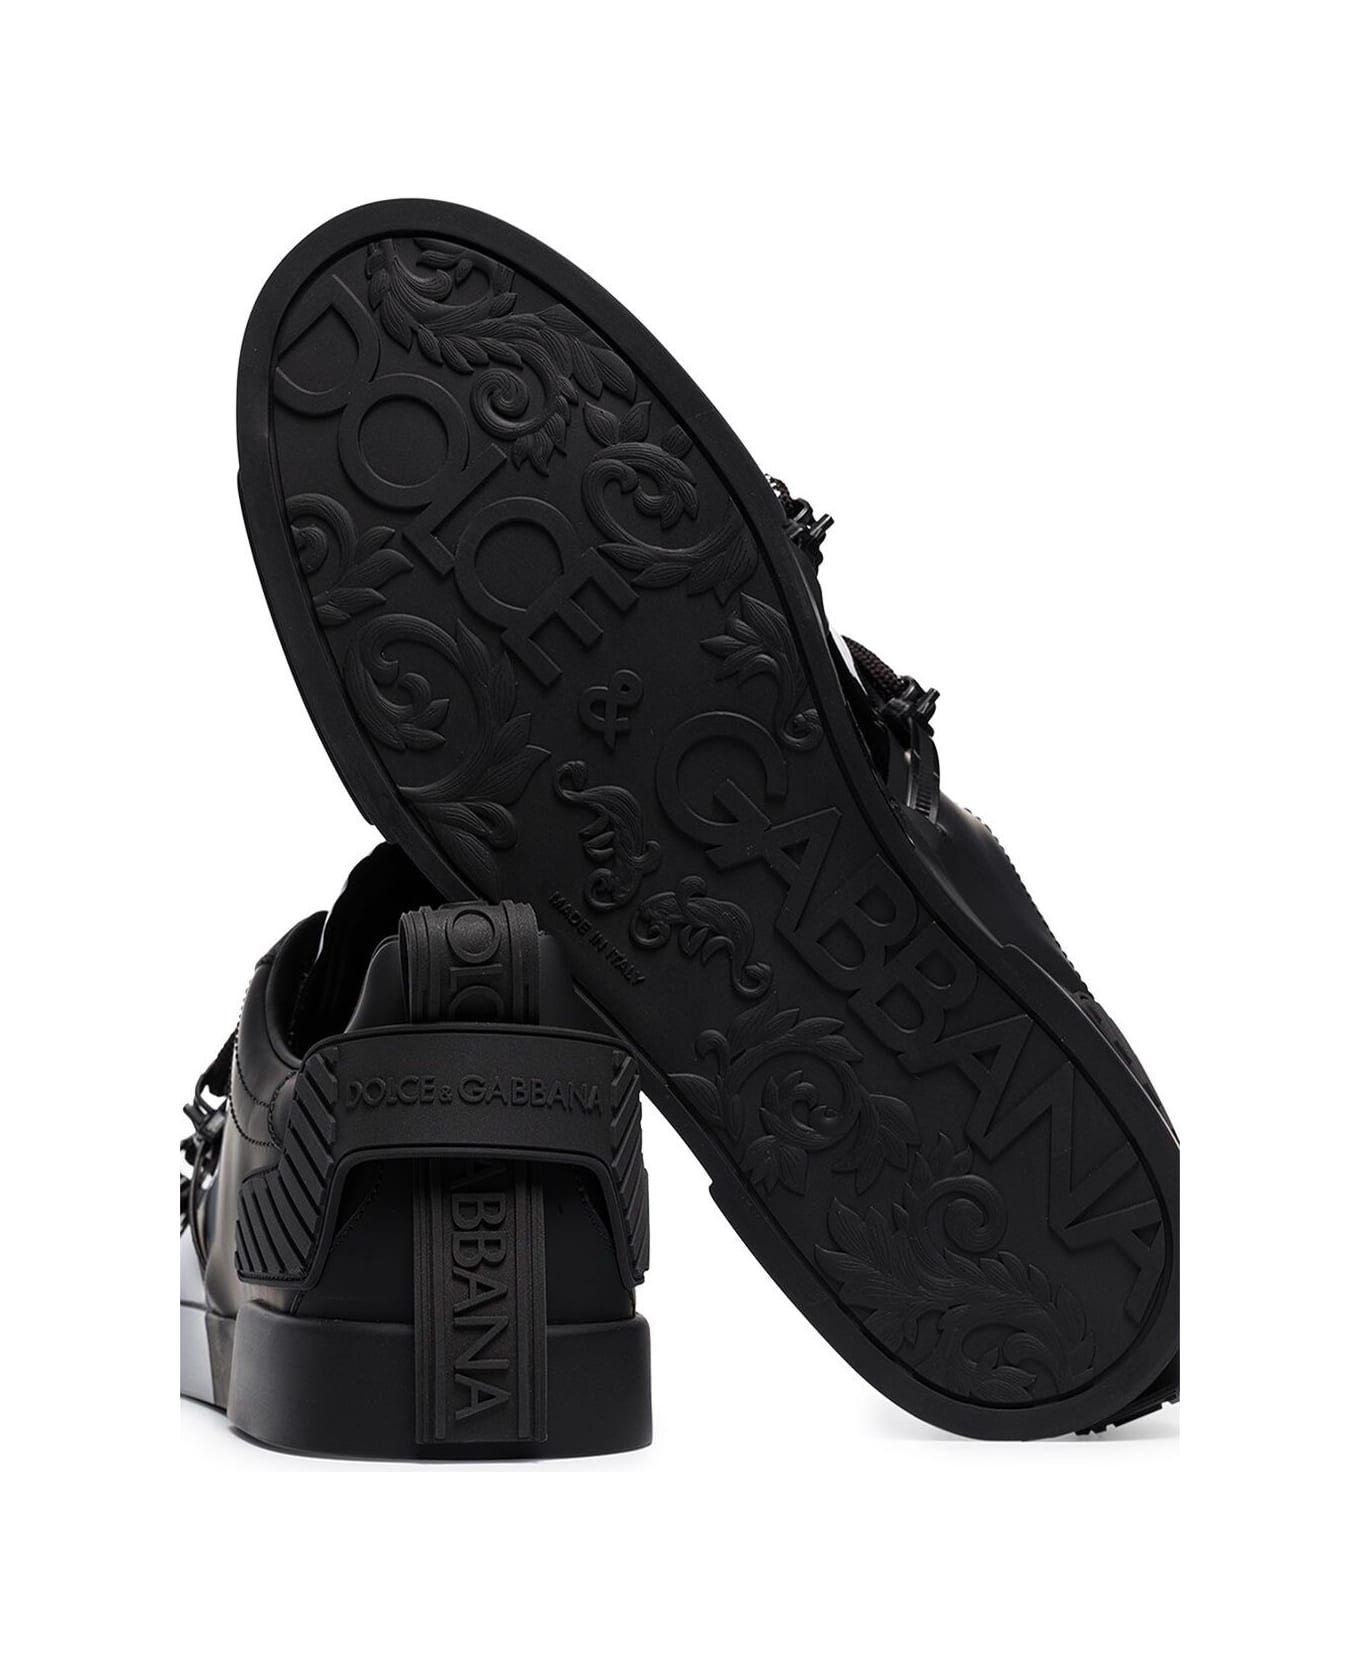 Dolce & Gabbana Man's Portofino Black Leather Sneakers - Black